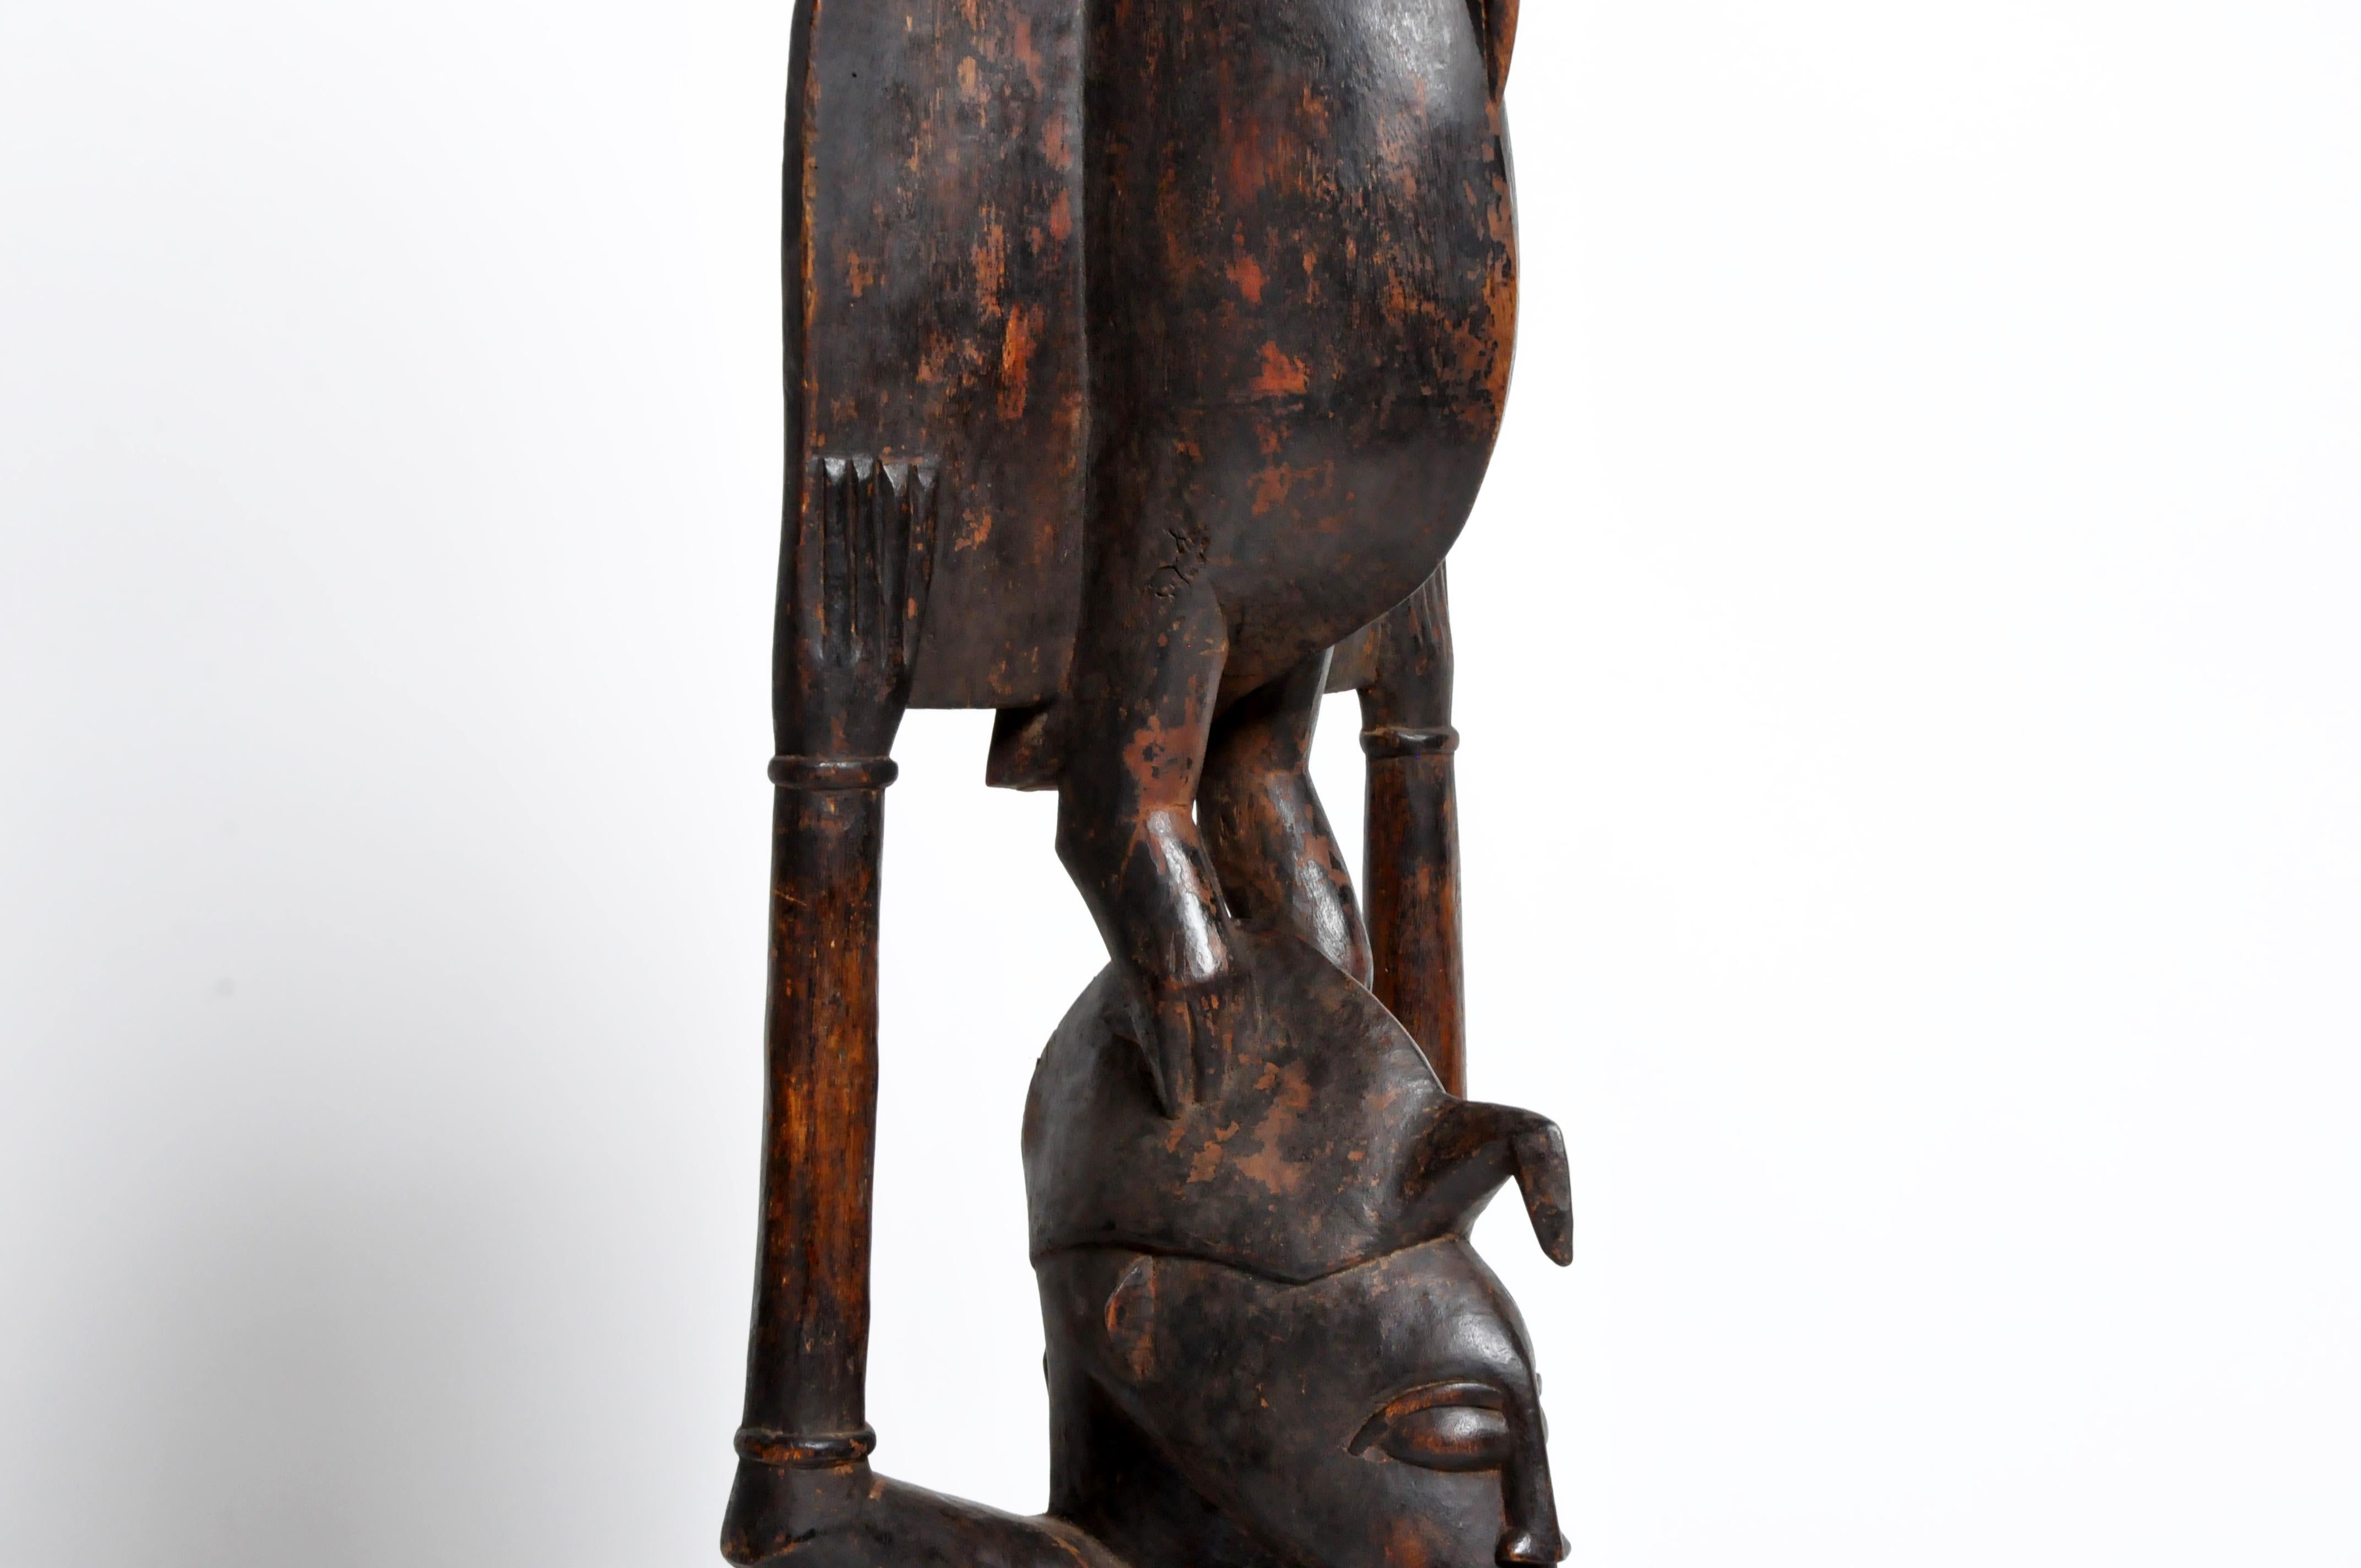 Small Yoruba Style Figure of a Woman Sculpture 5